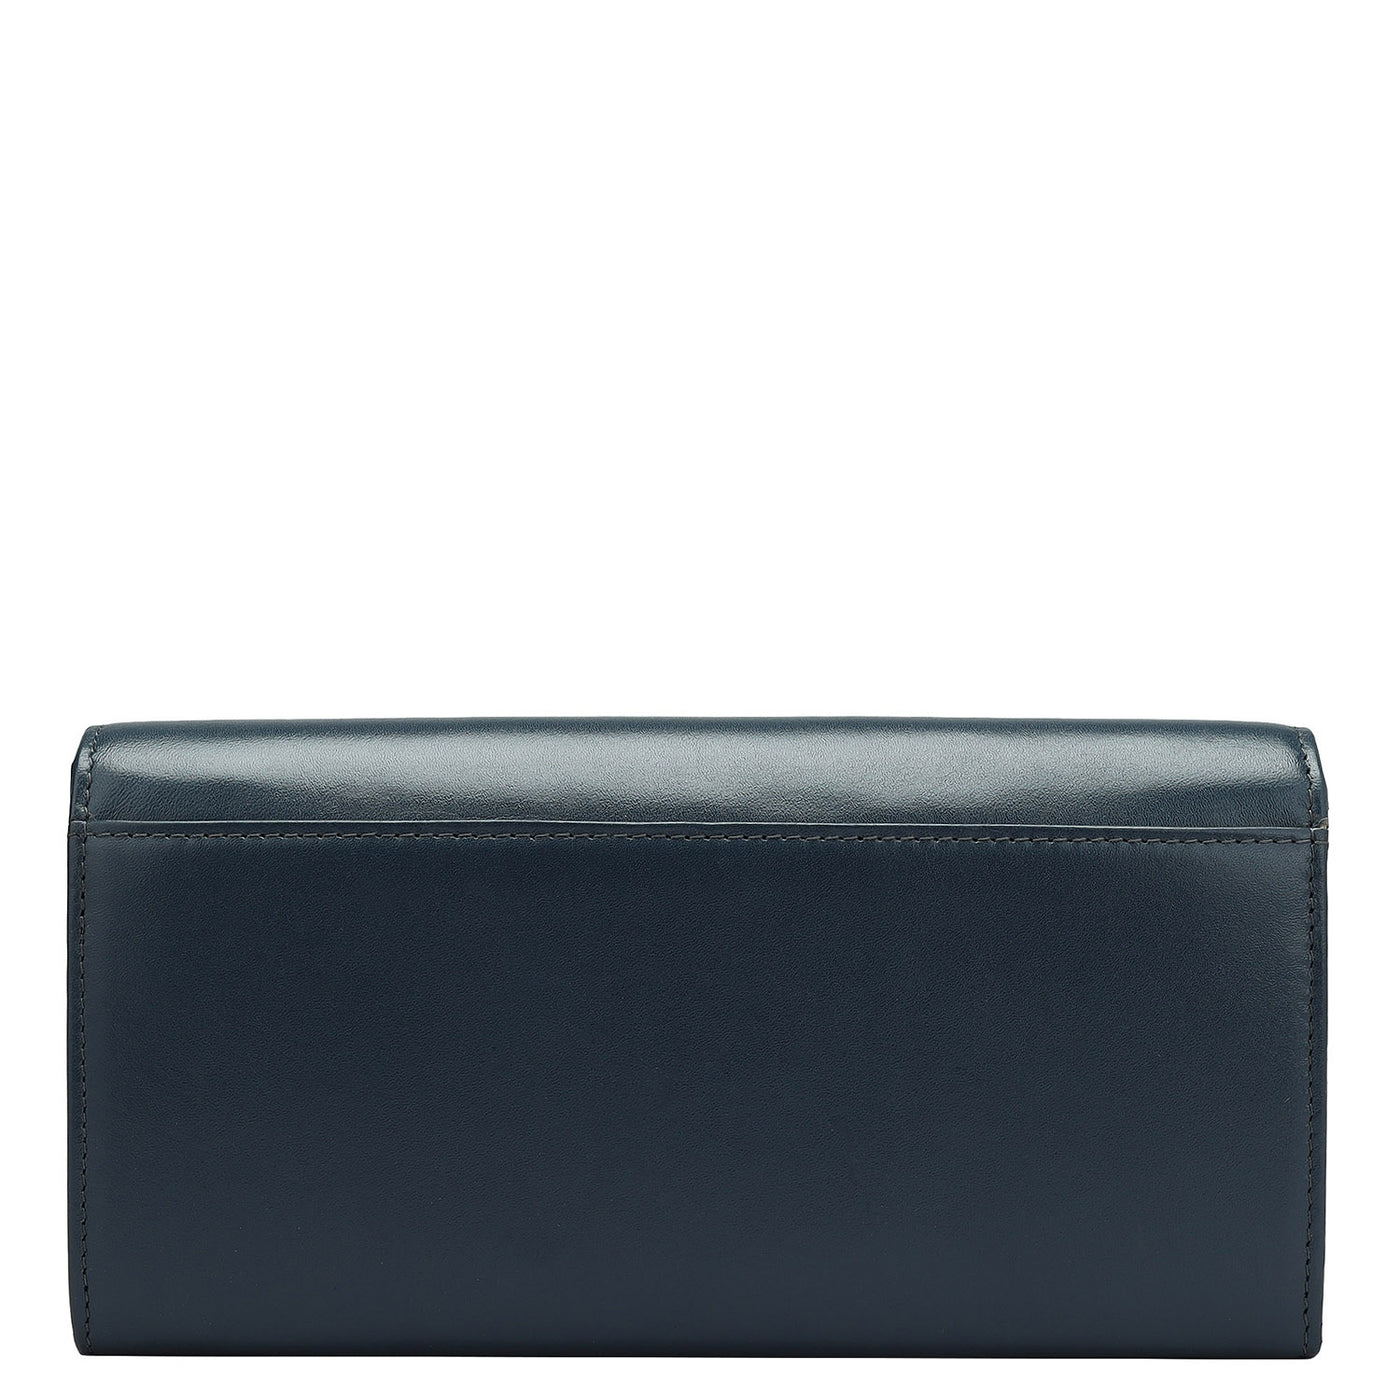 Plain Leather Ladies Wallet - Navy